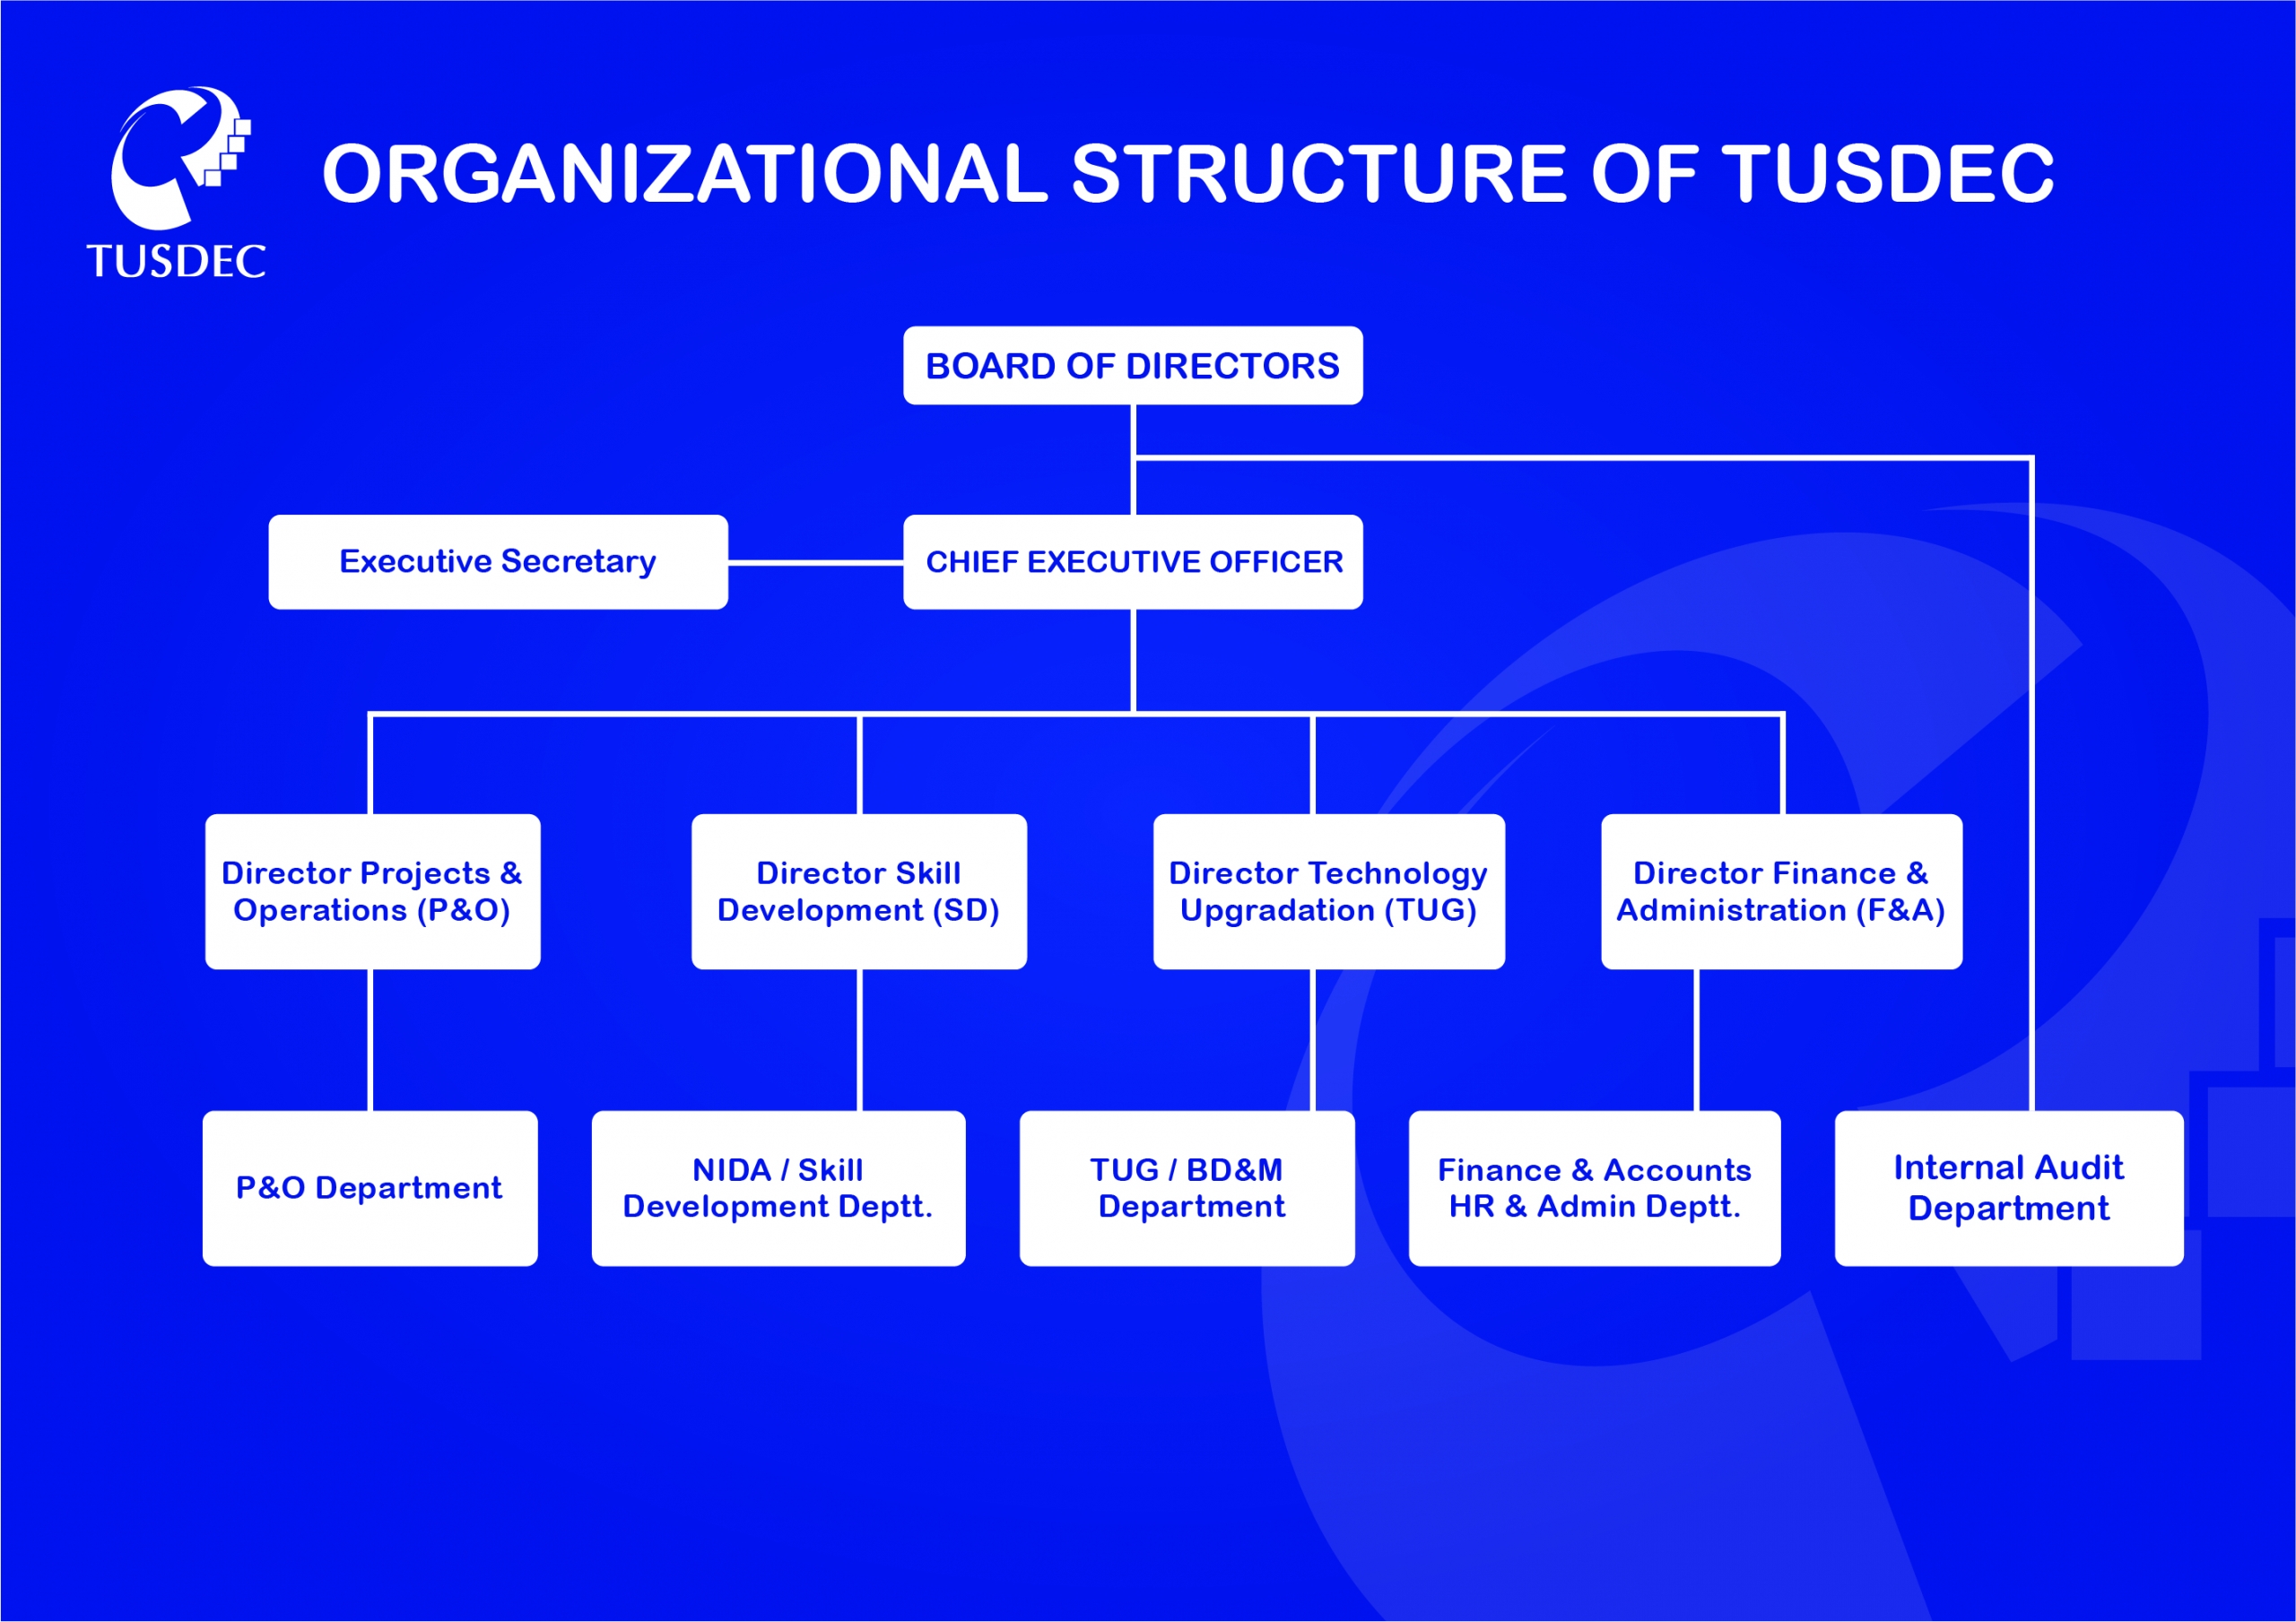 TUSDEC Organization